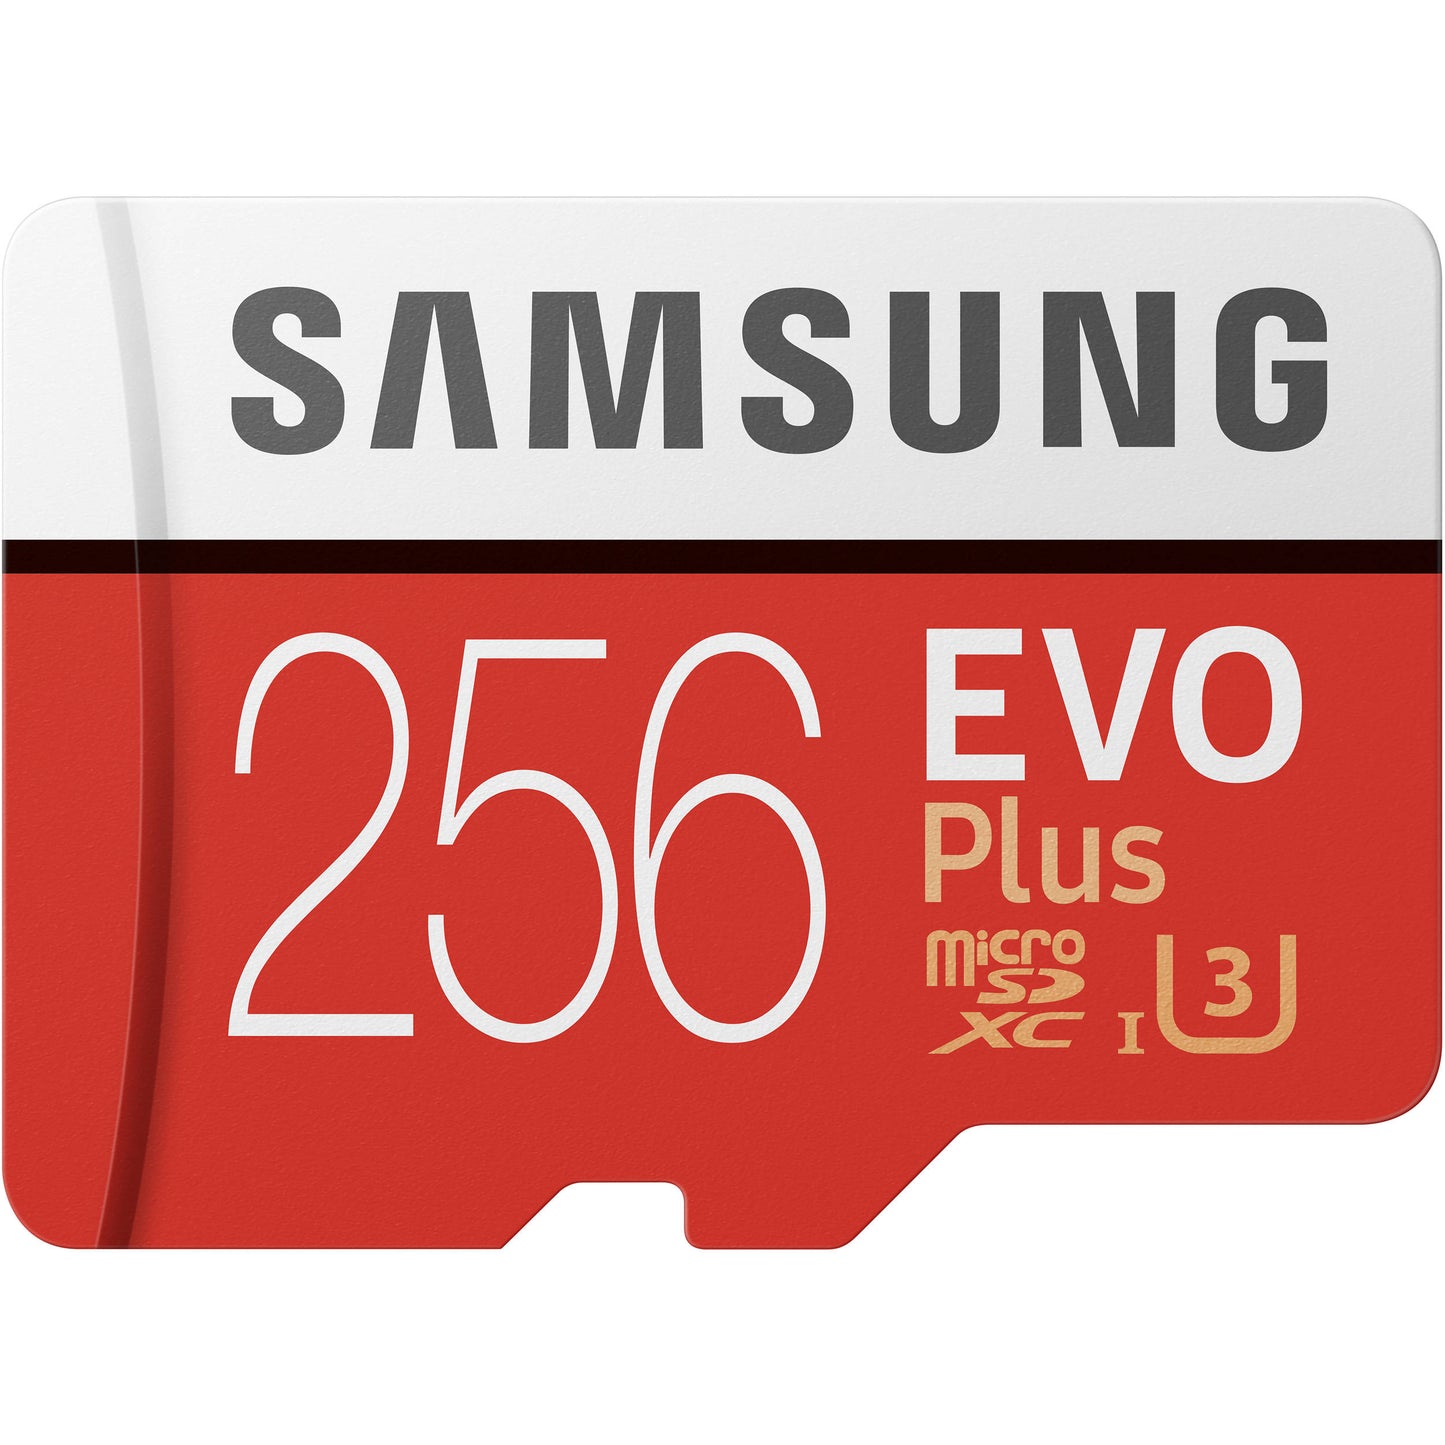 Samsung 256GB EVO Plus microSD Memory Card